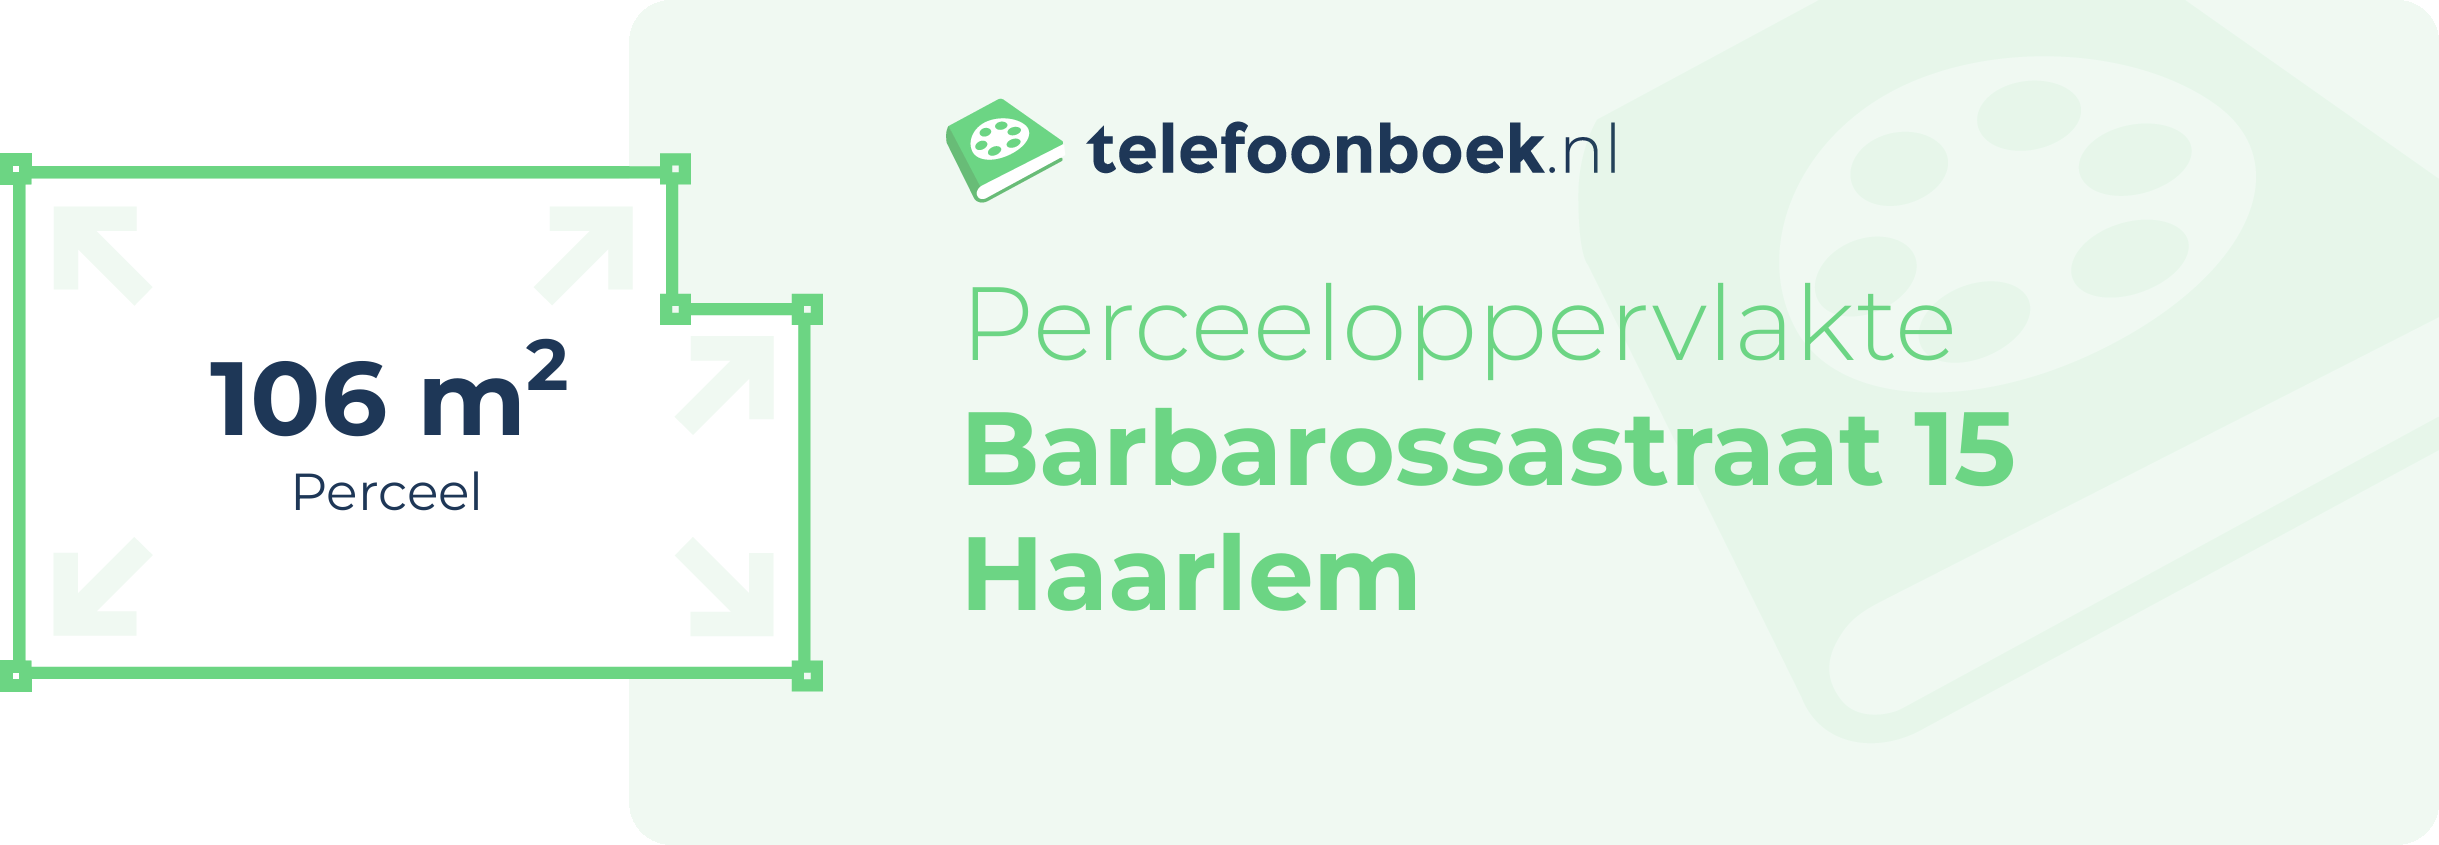 Perceeloppervlakte Barbarossastraat 15 Haarlem